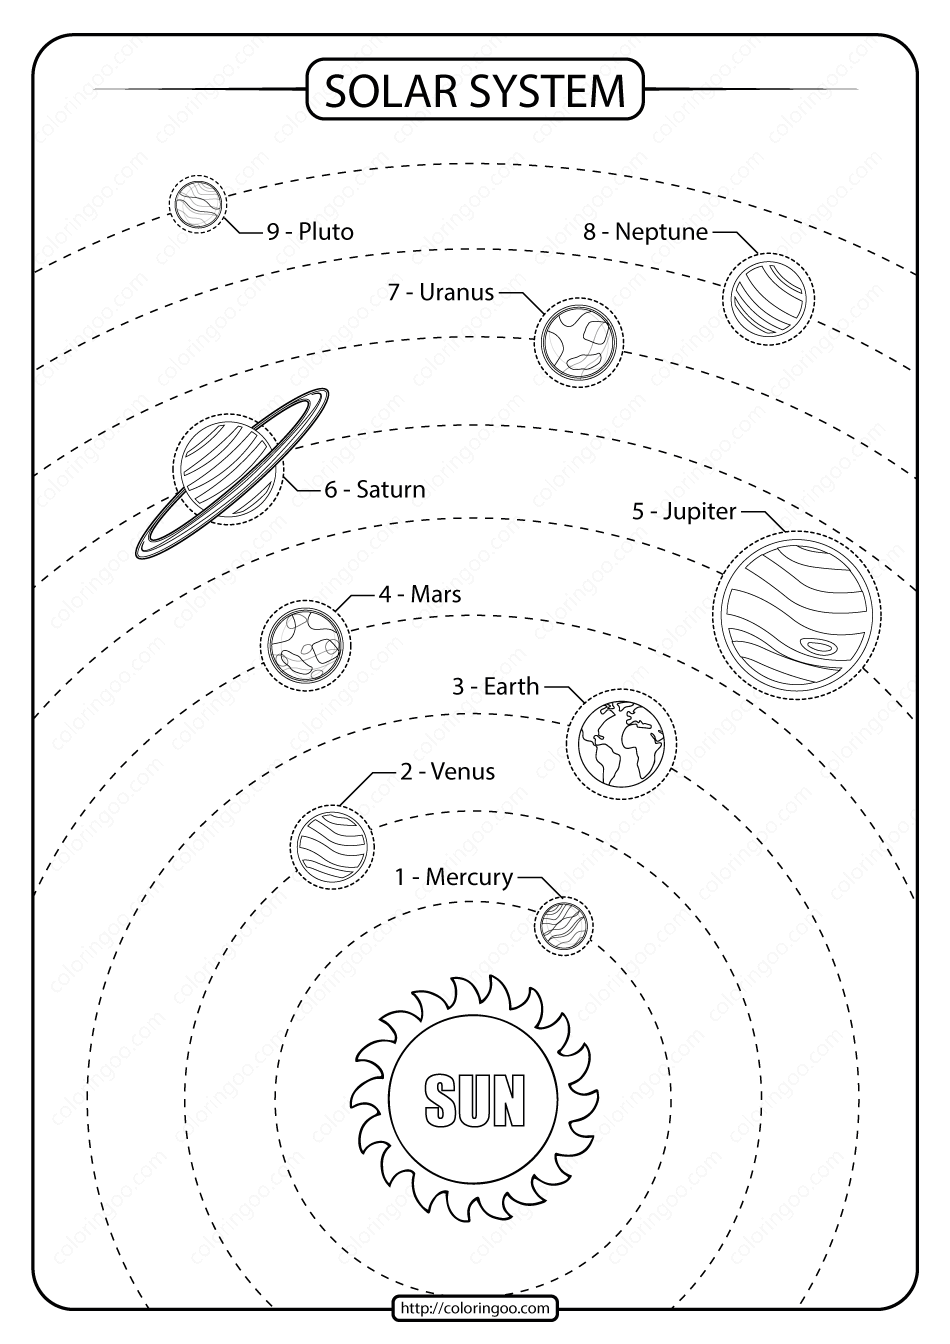 solar system drawing pdf